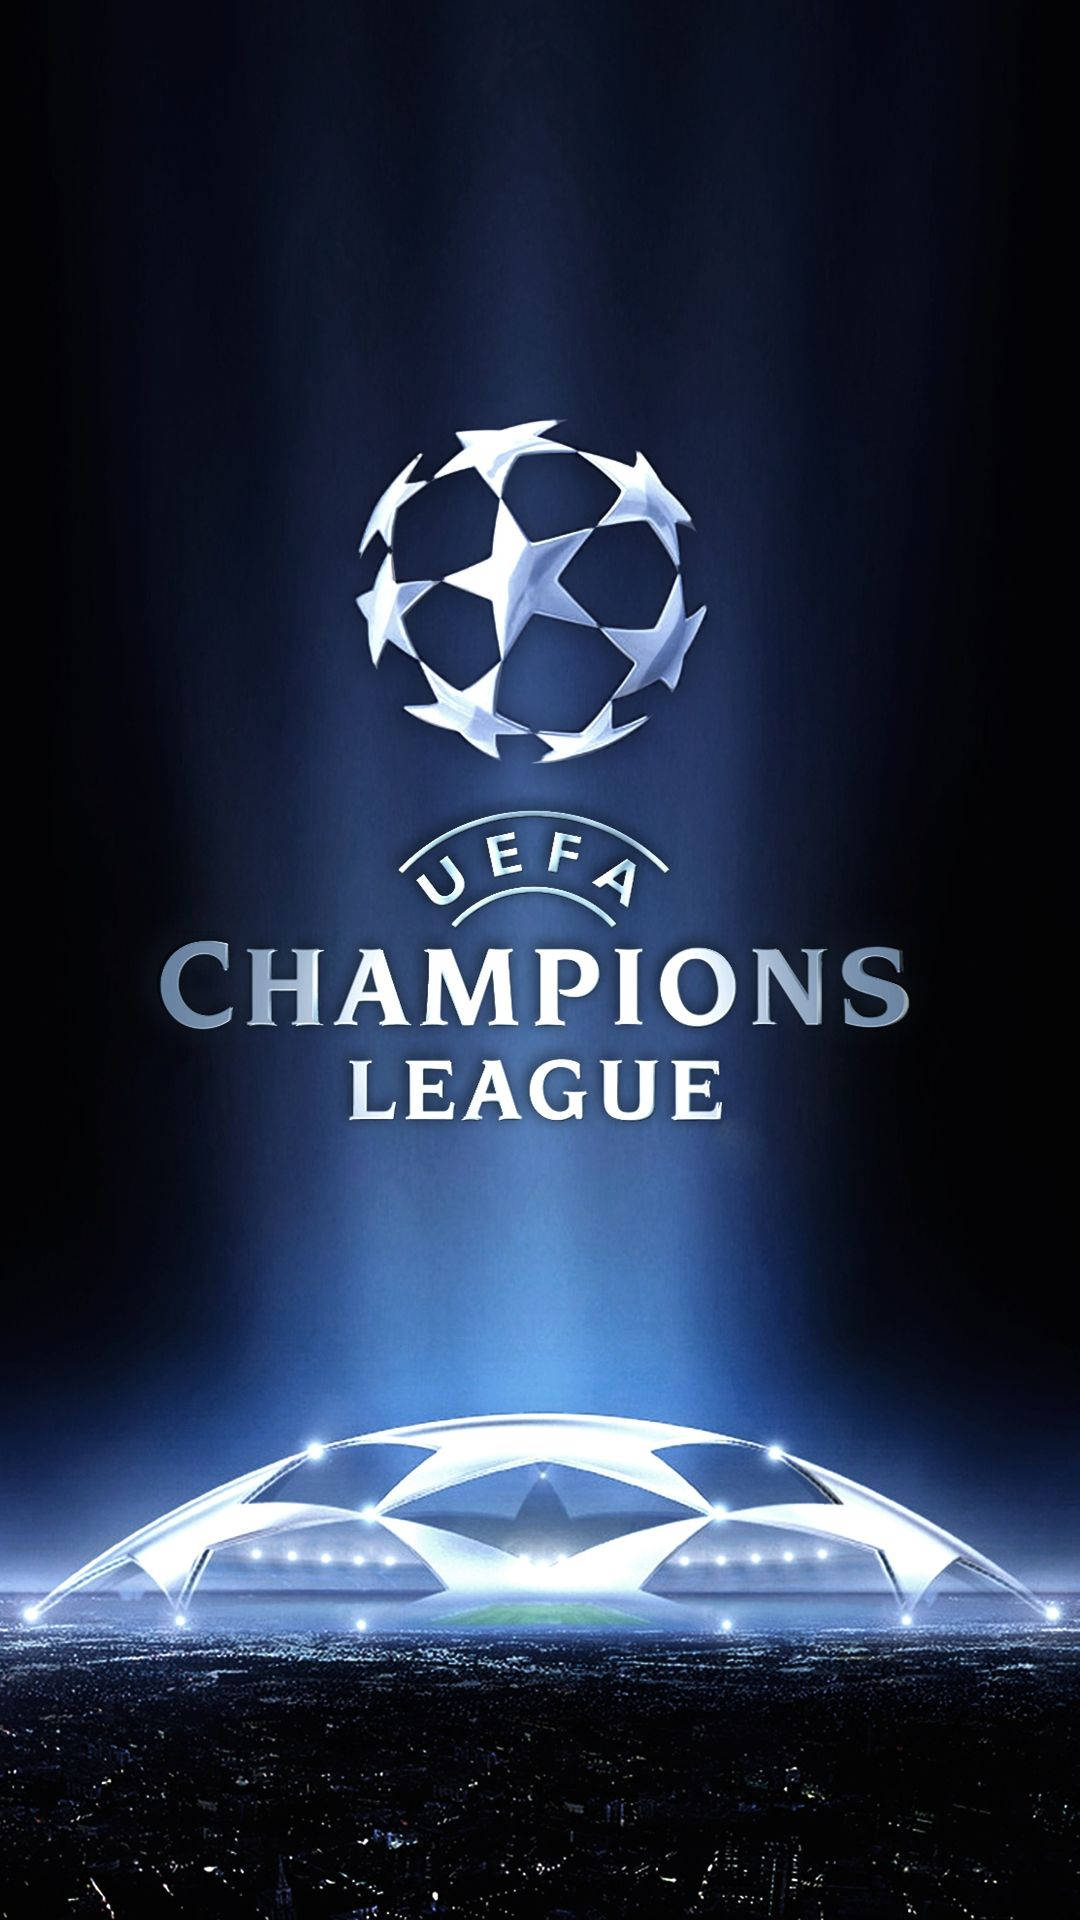 Championsleague Logo Über Dem Stadion Wallpaper